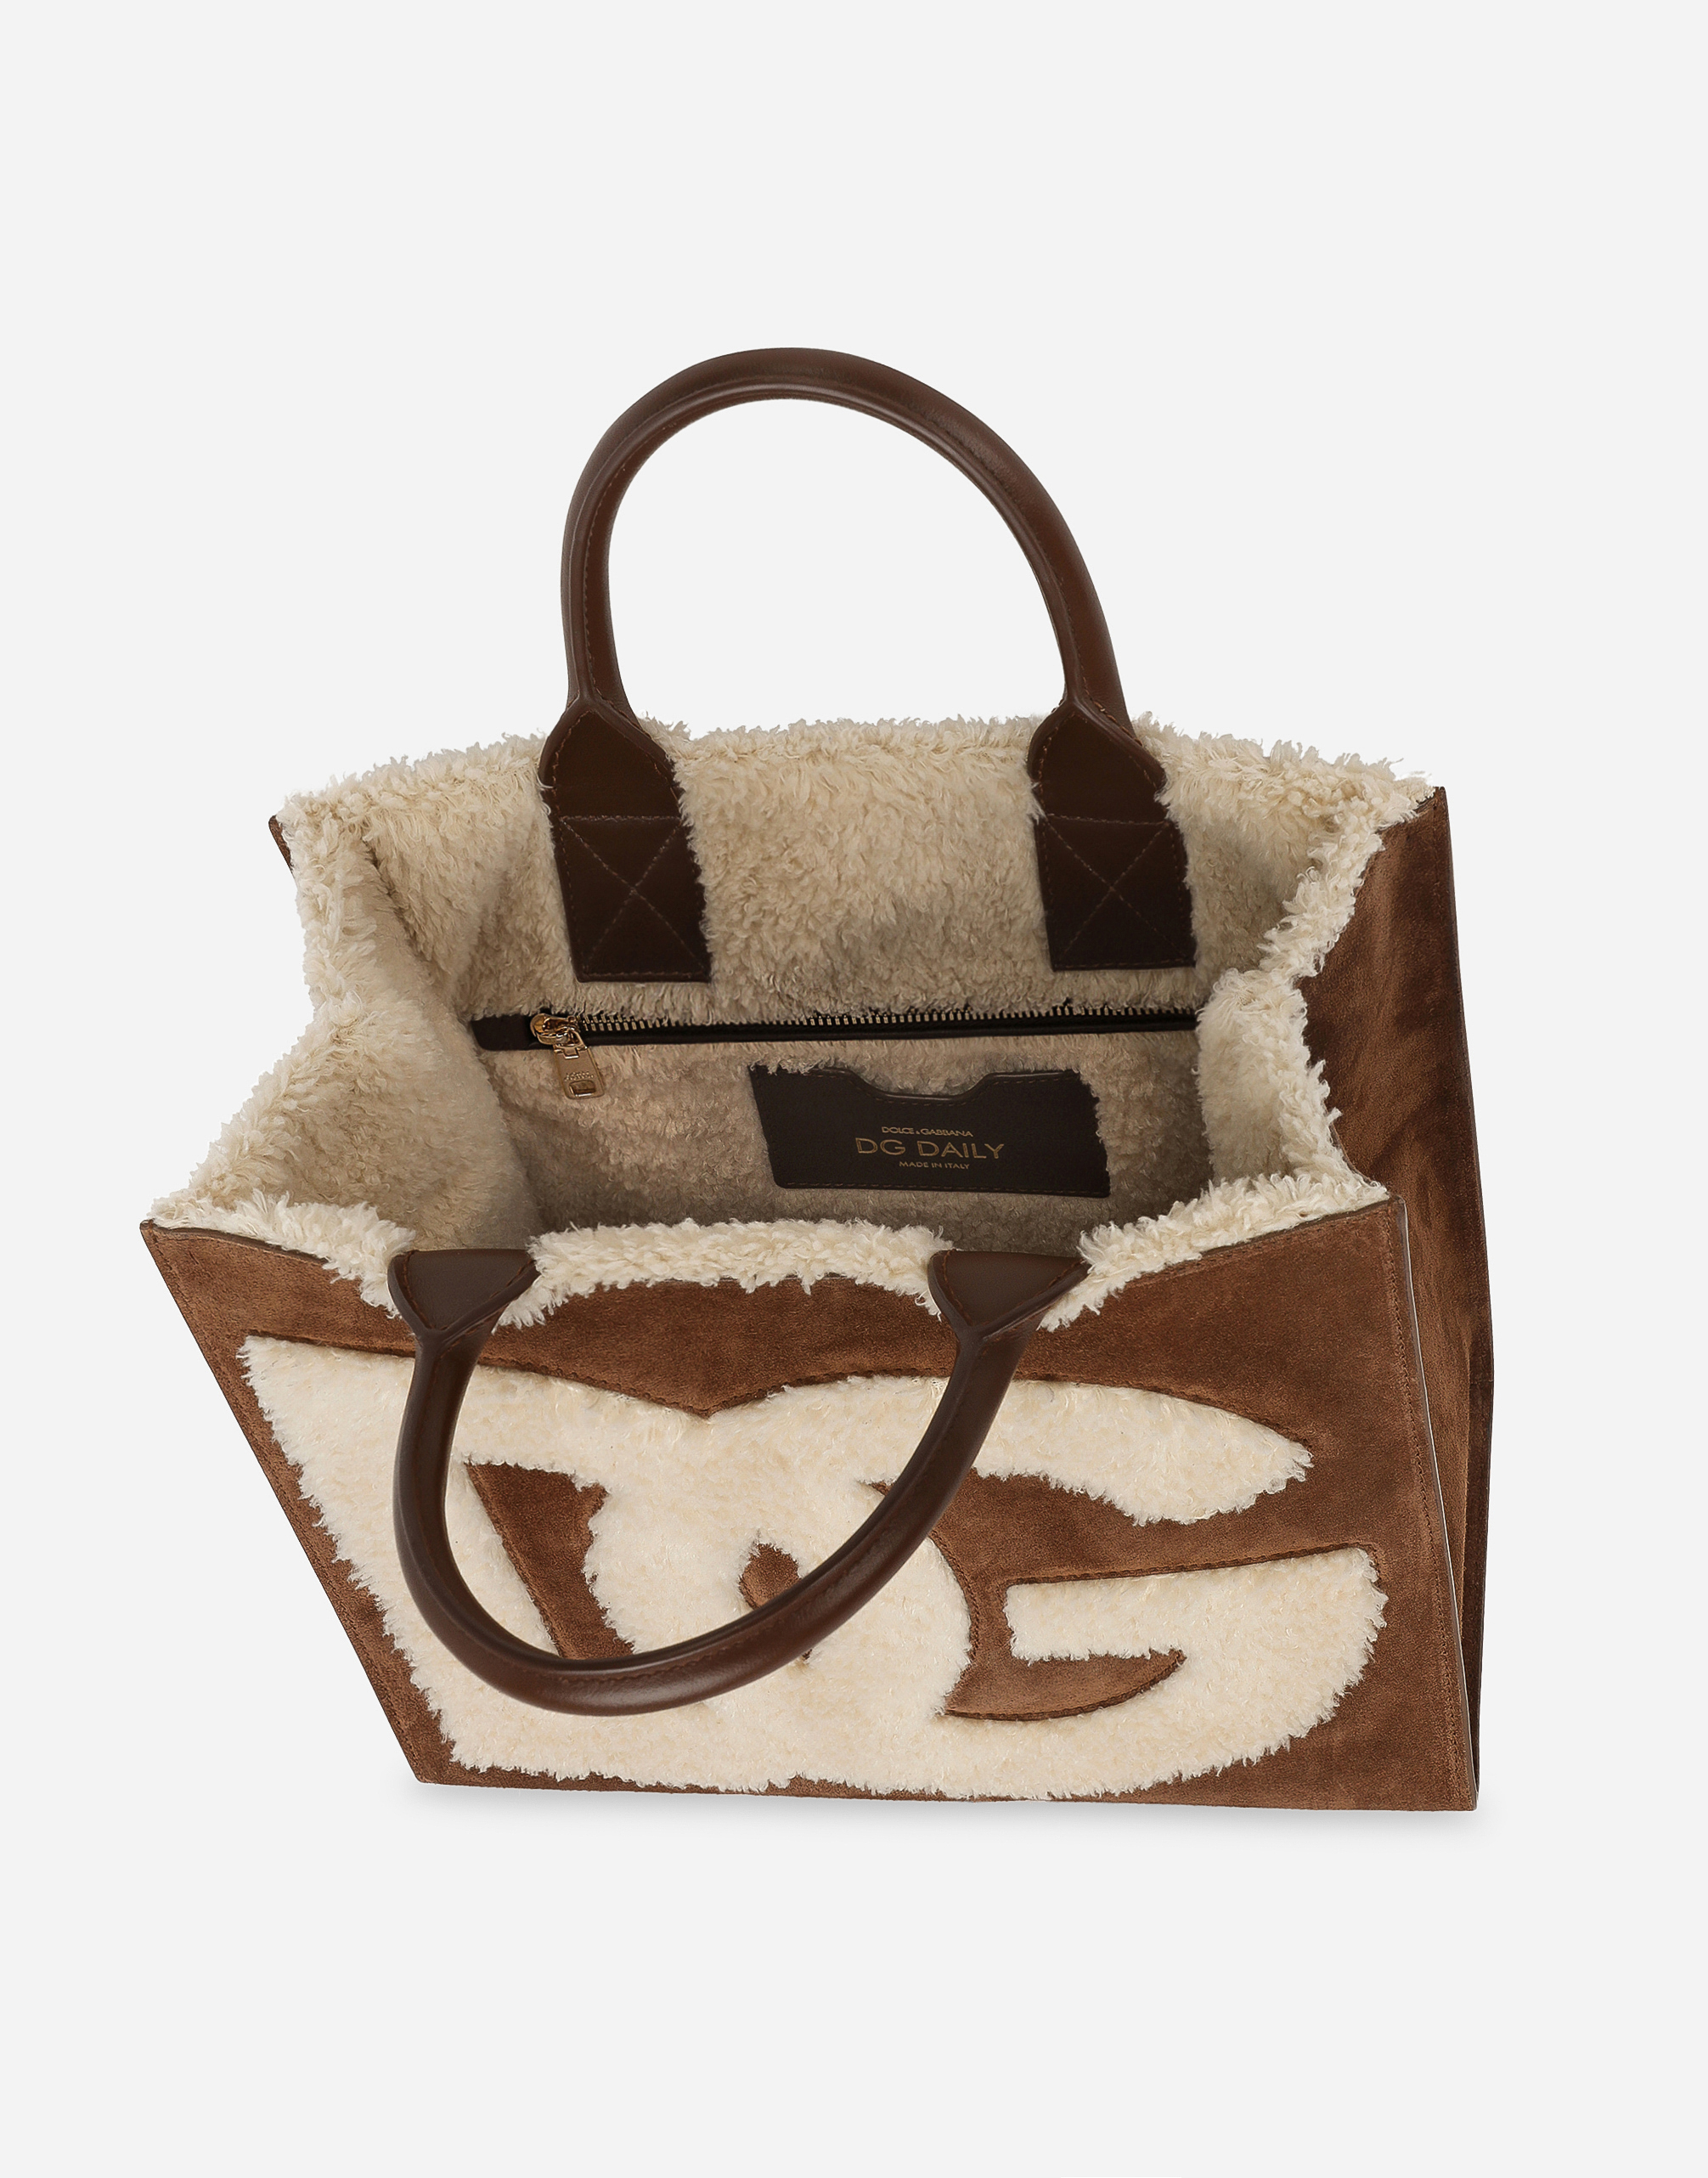 Dolce & Gabbana Small DG Daily Tote Bag - Farfetch